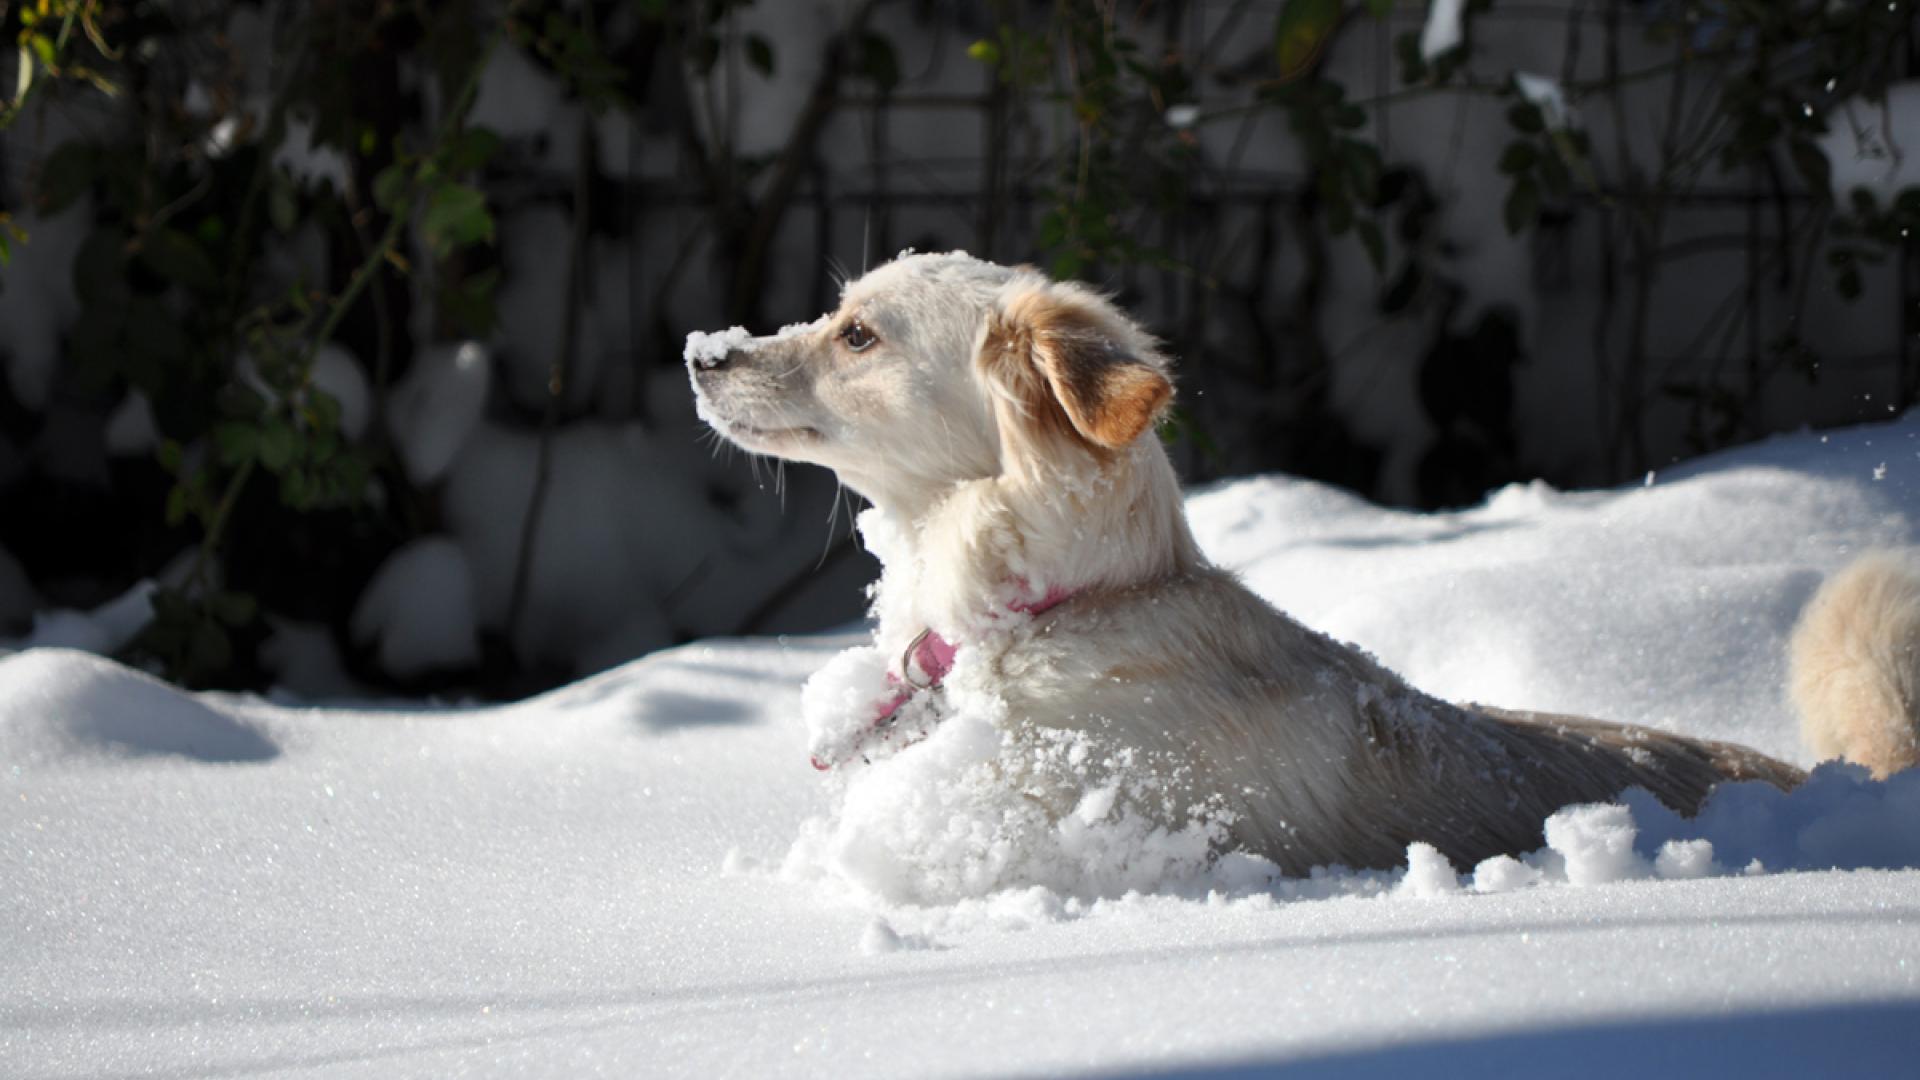 [50+] Dogs in the Snow Wallpaper | WallpaperSafari.com